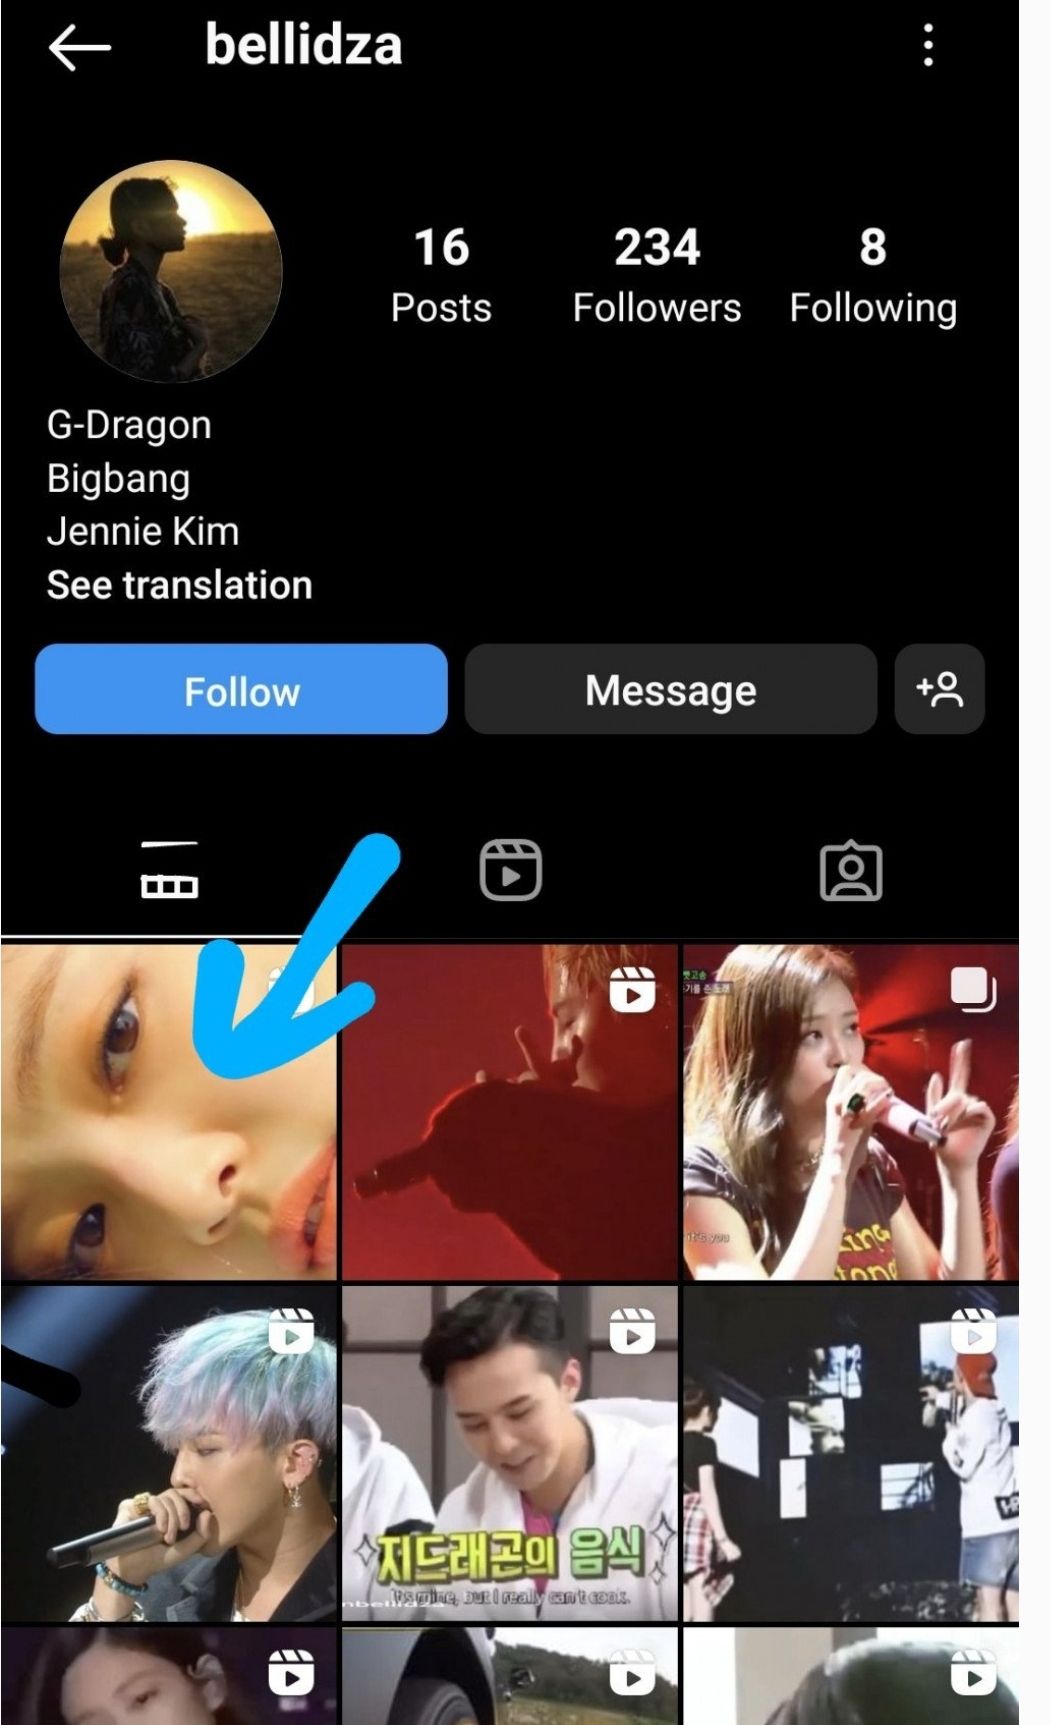 Postingan OP di Korea : G-Dragon like postingan video shipping diringan dengan Jenni BLACKPINK./Allkpop